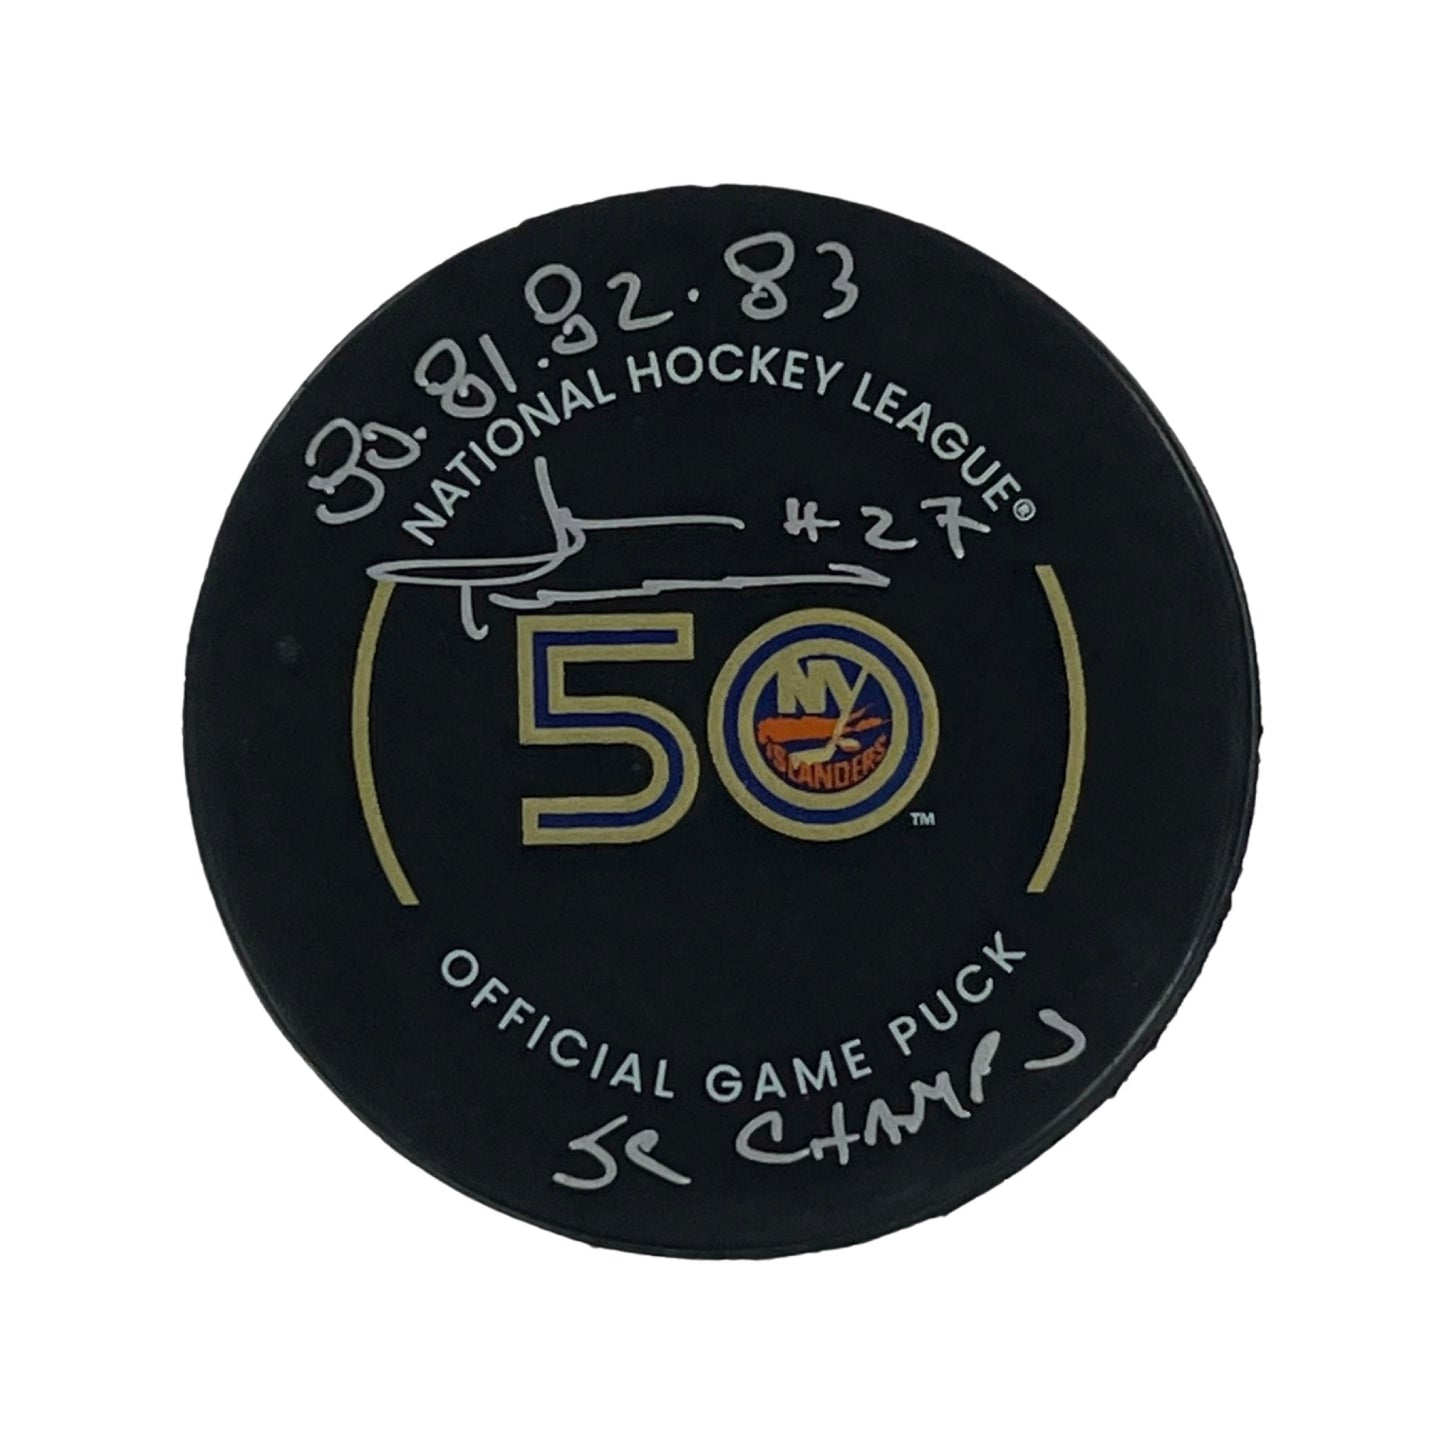 John Tonelli Autographed New York Islanders Official Game Puck “80 81 82 83 SC Champs” Inscription Steiner CX